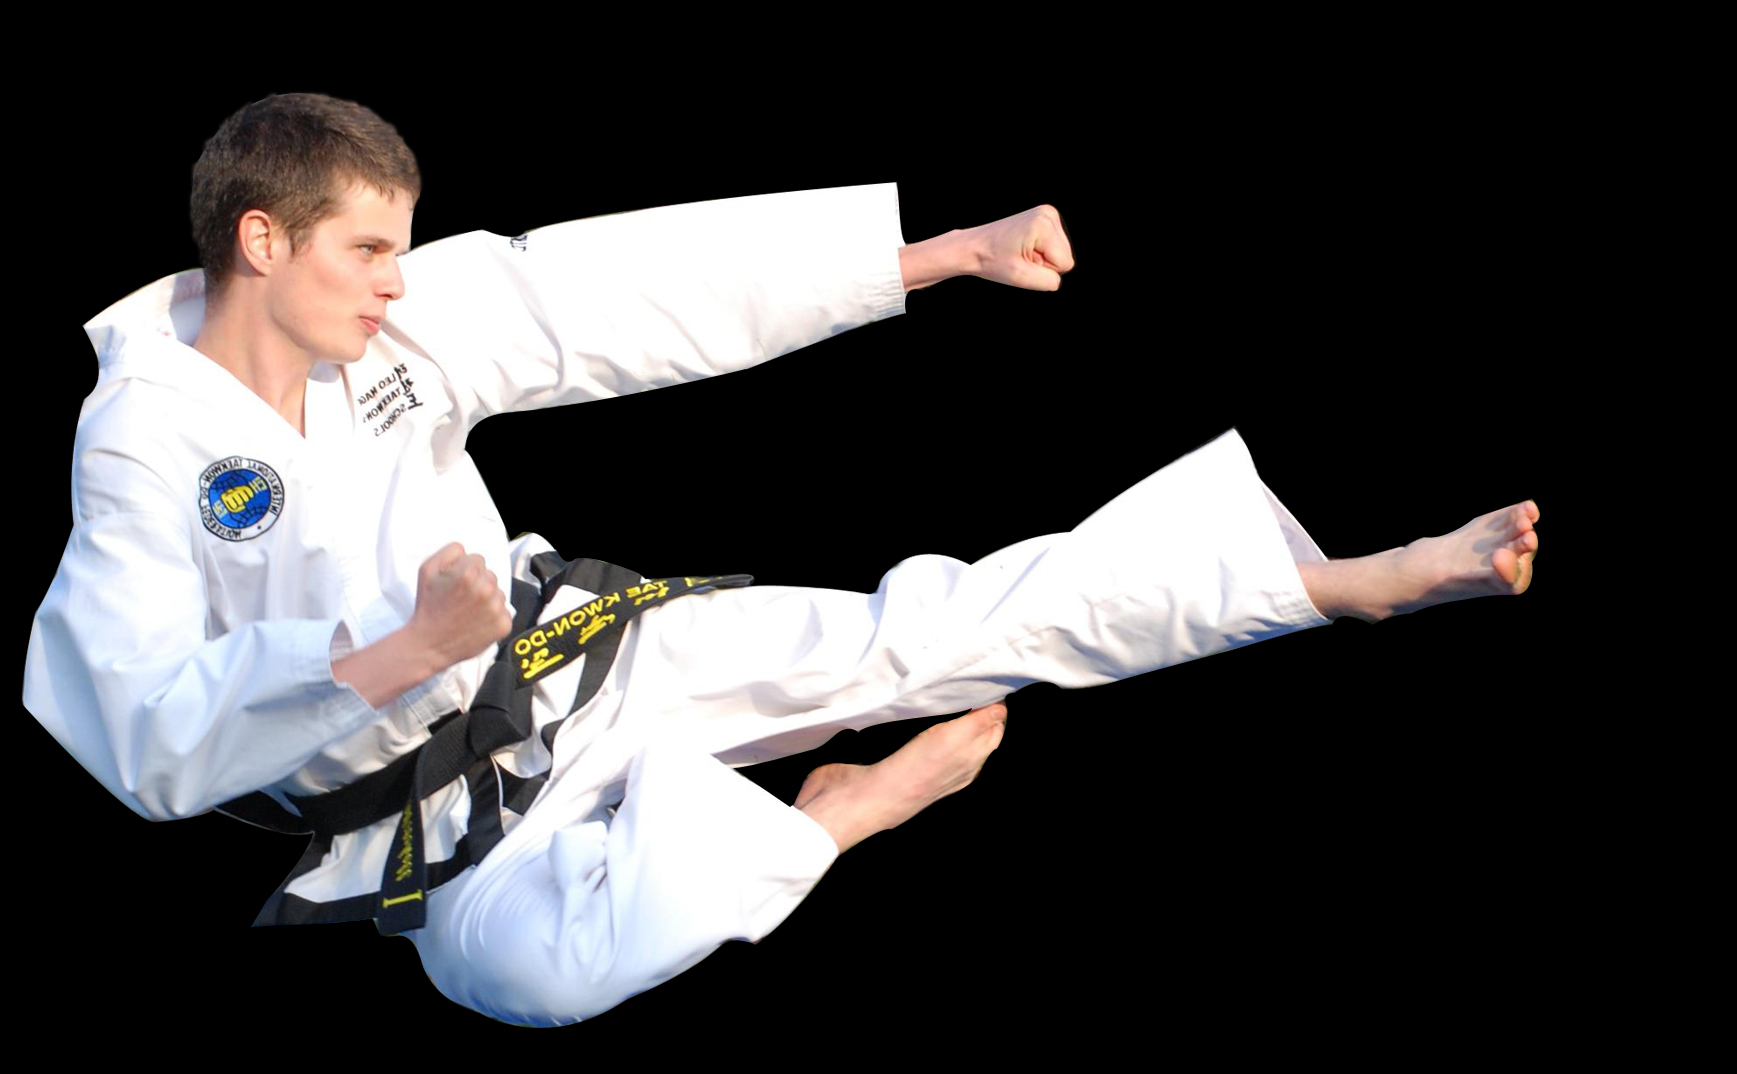 File:Taekwondo kick.jpg